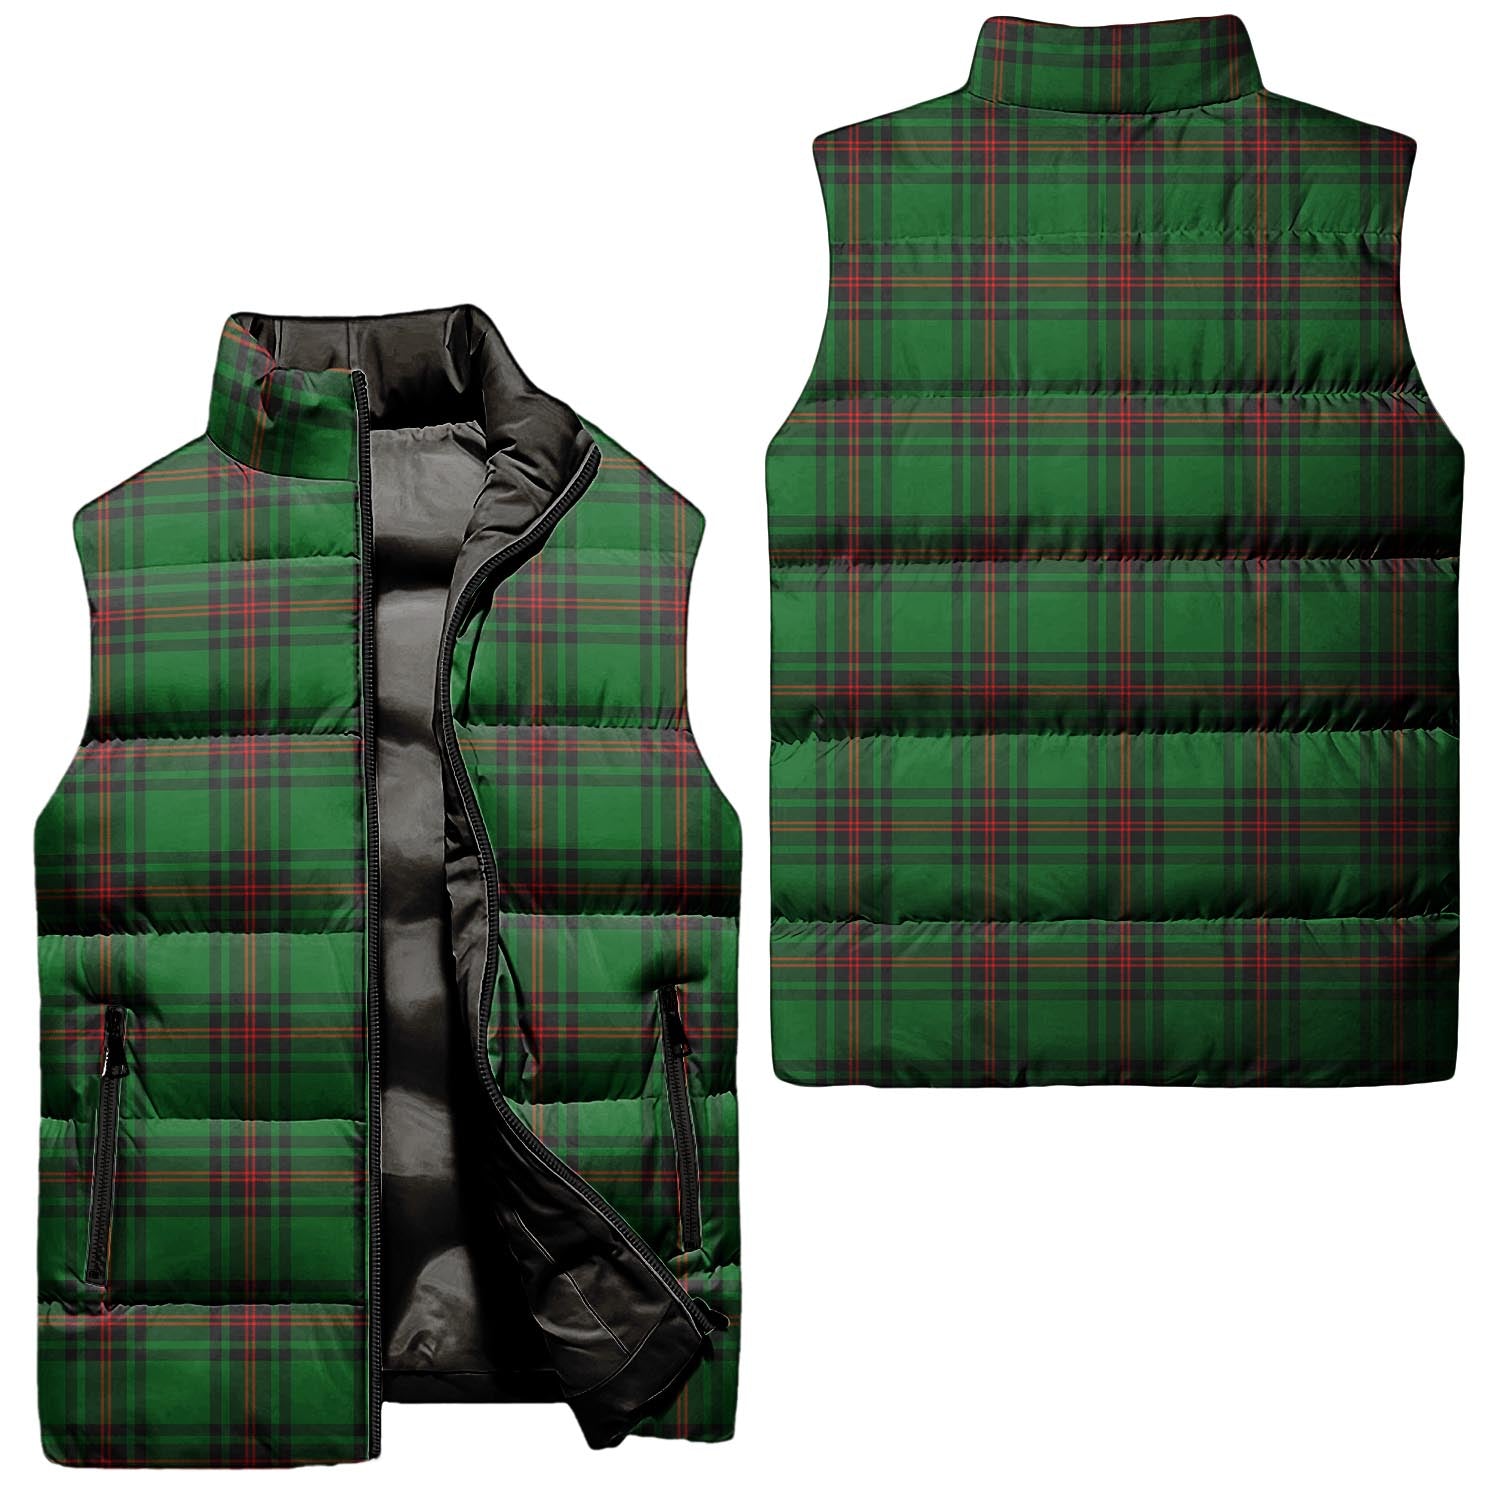 kirkaldy-tartan-puffer-vest-tartan-plaid-sleeveless-down-jacket